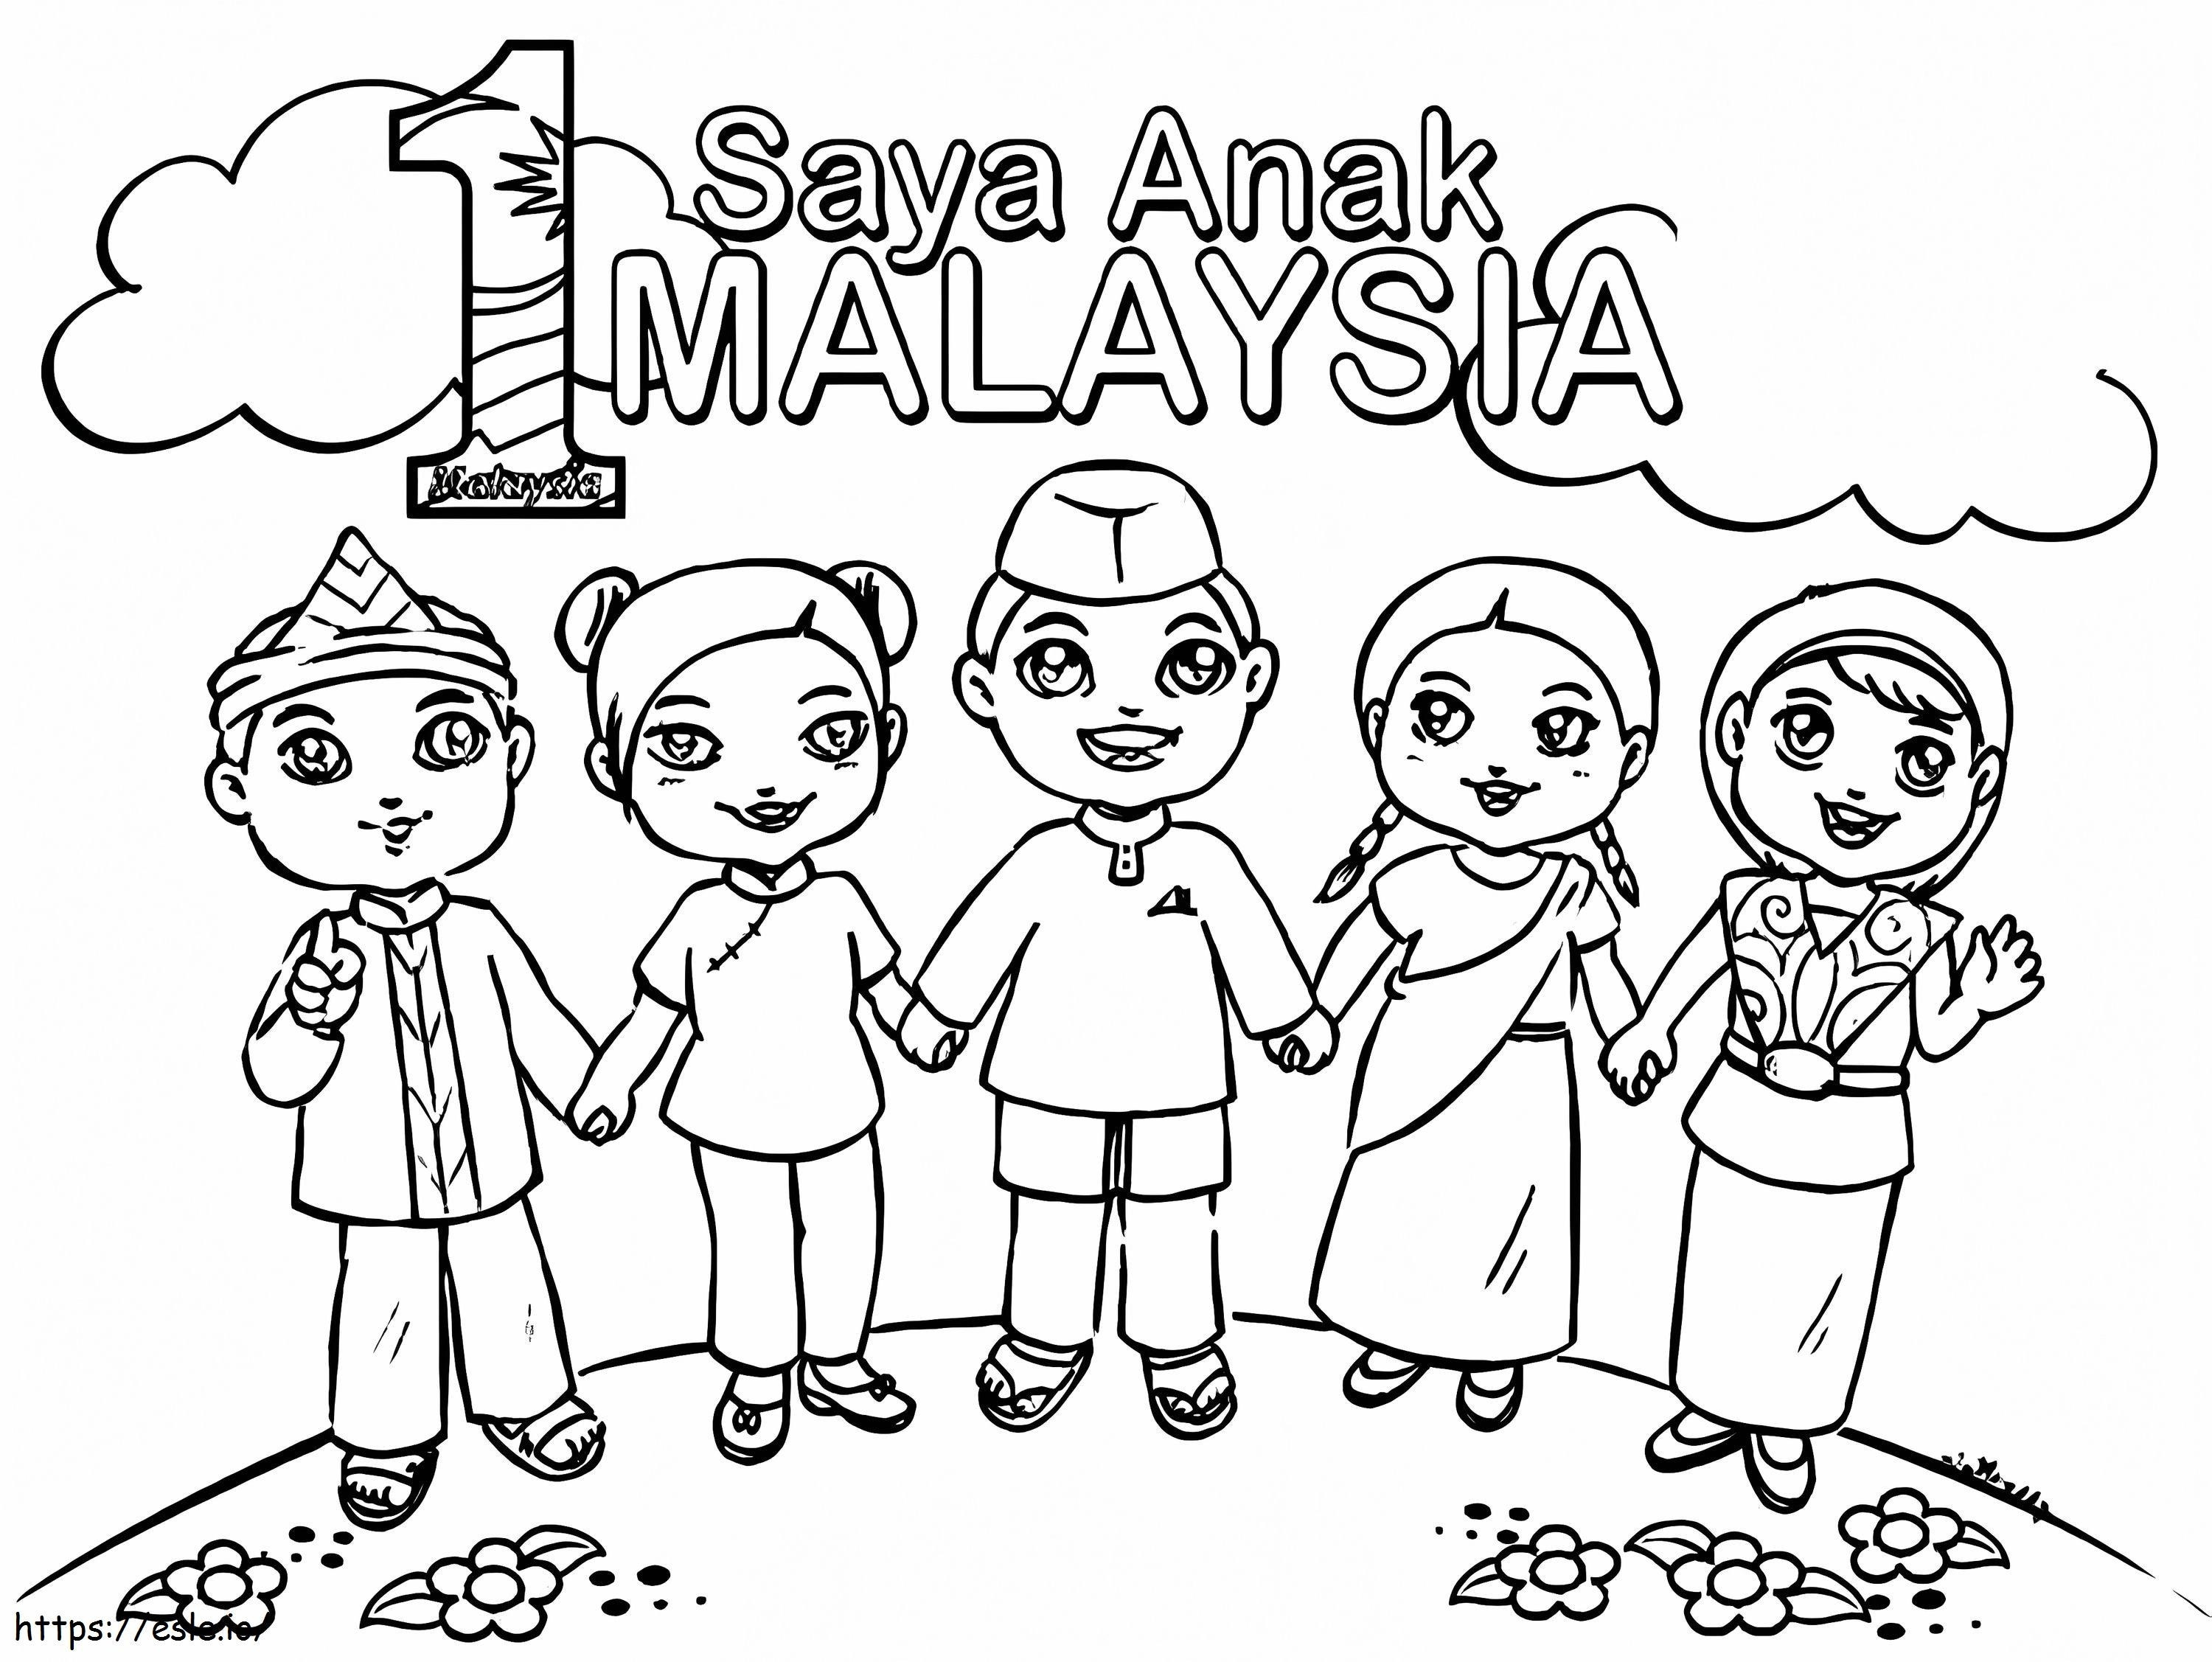 Malajziai gyerekek kifestő